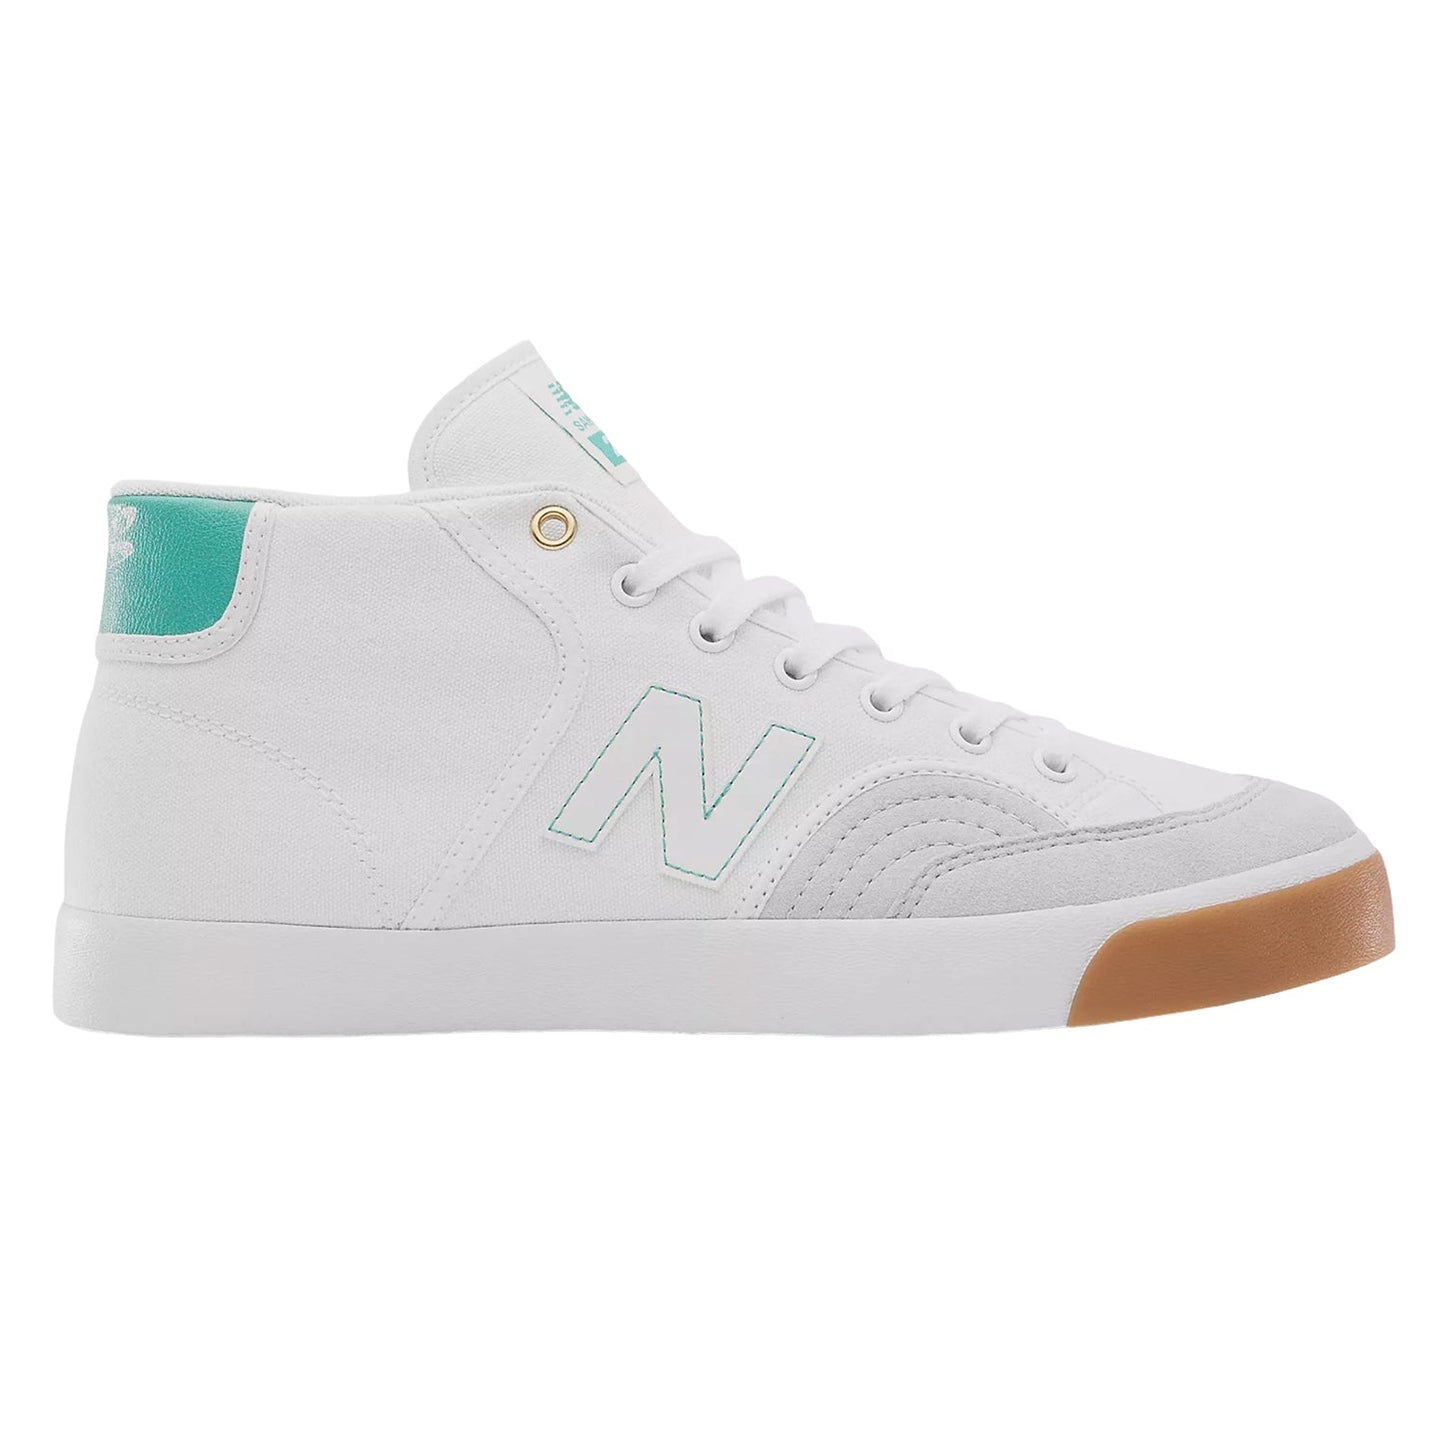 New Balance Numeric 213 White / Blue Skate Shoes